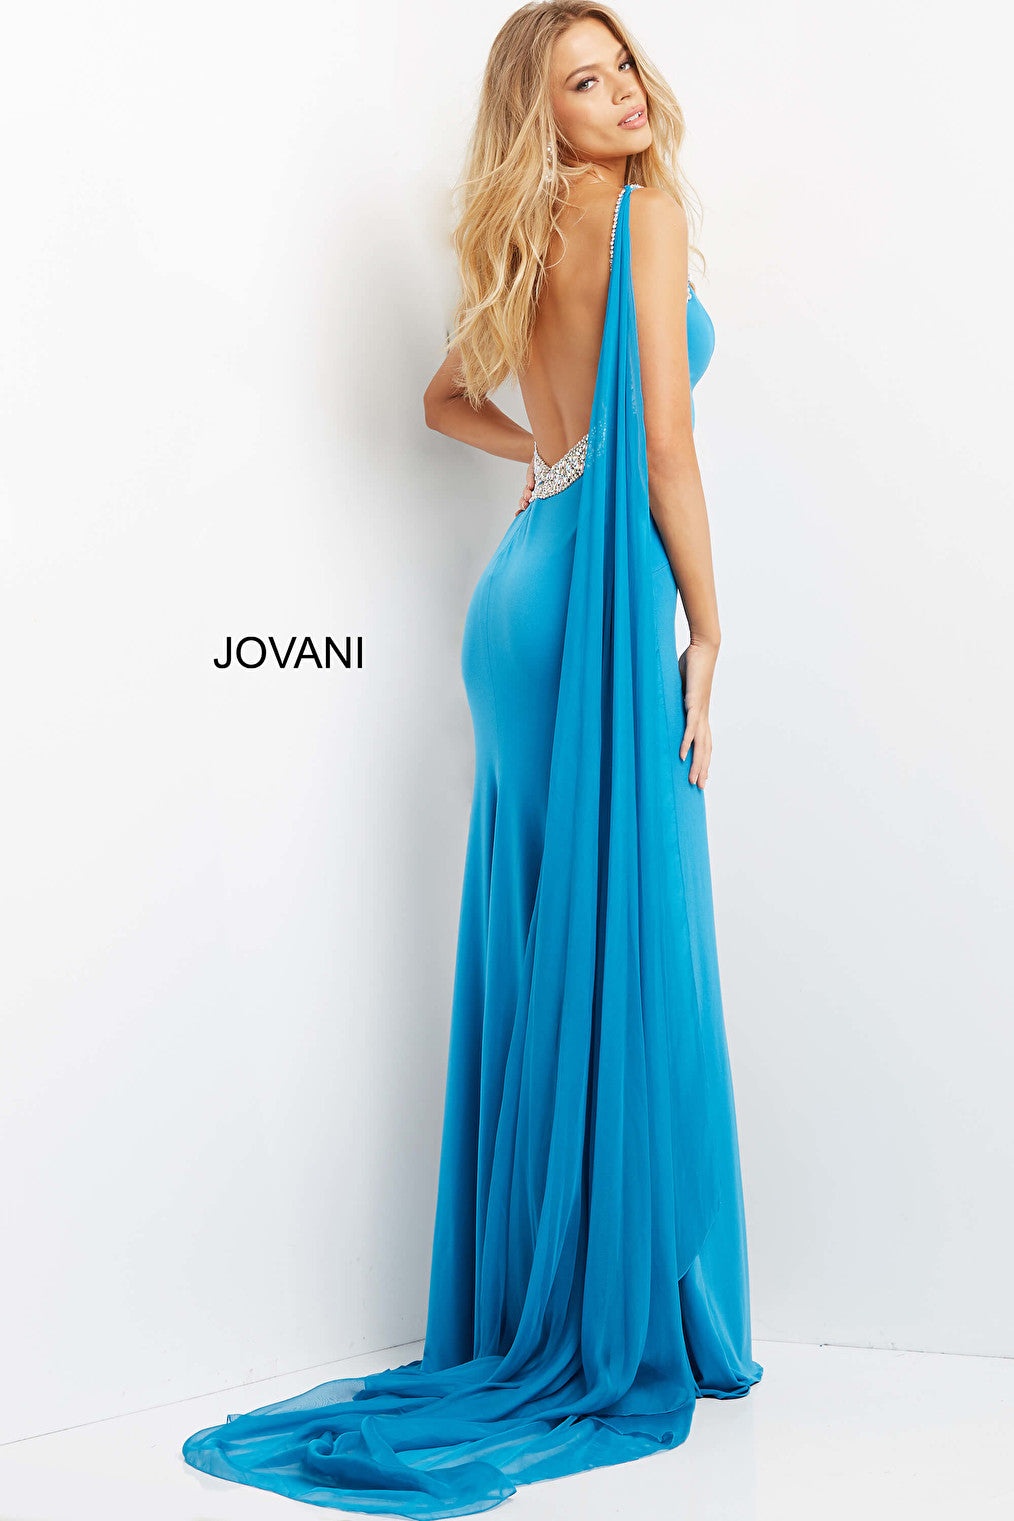 Turquoise Jovani dress with train 08022